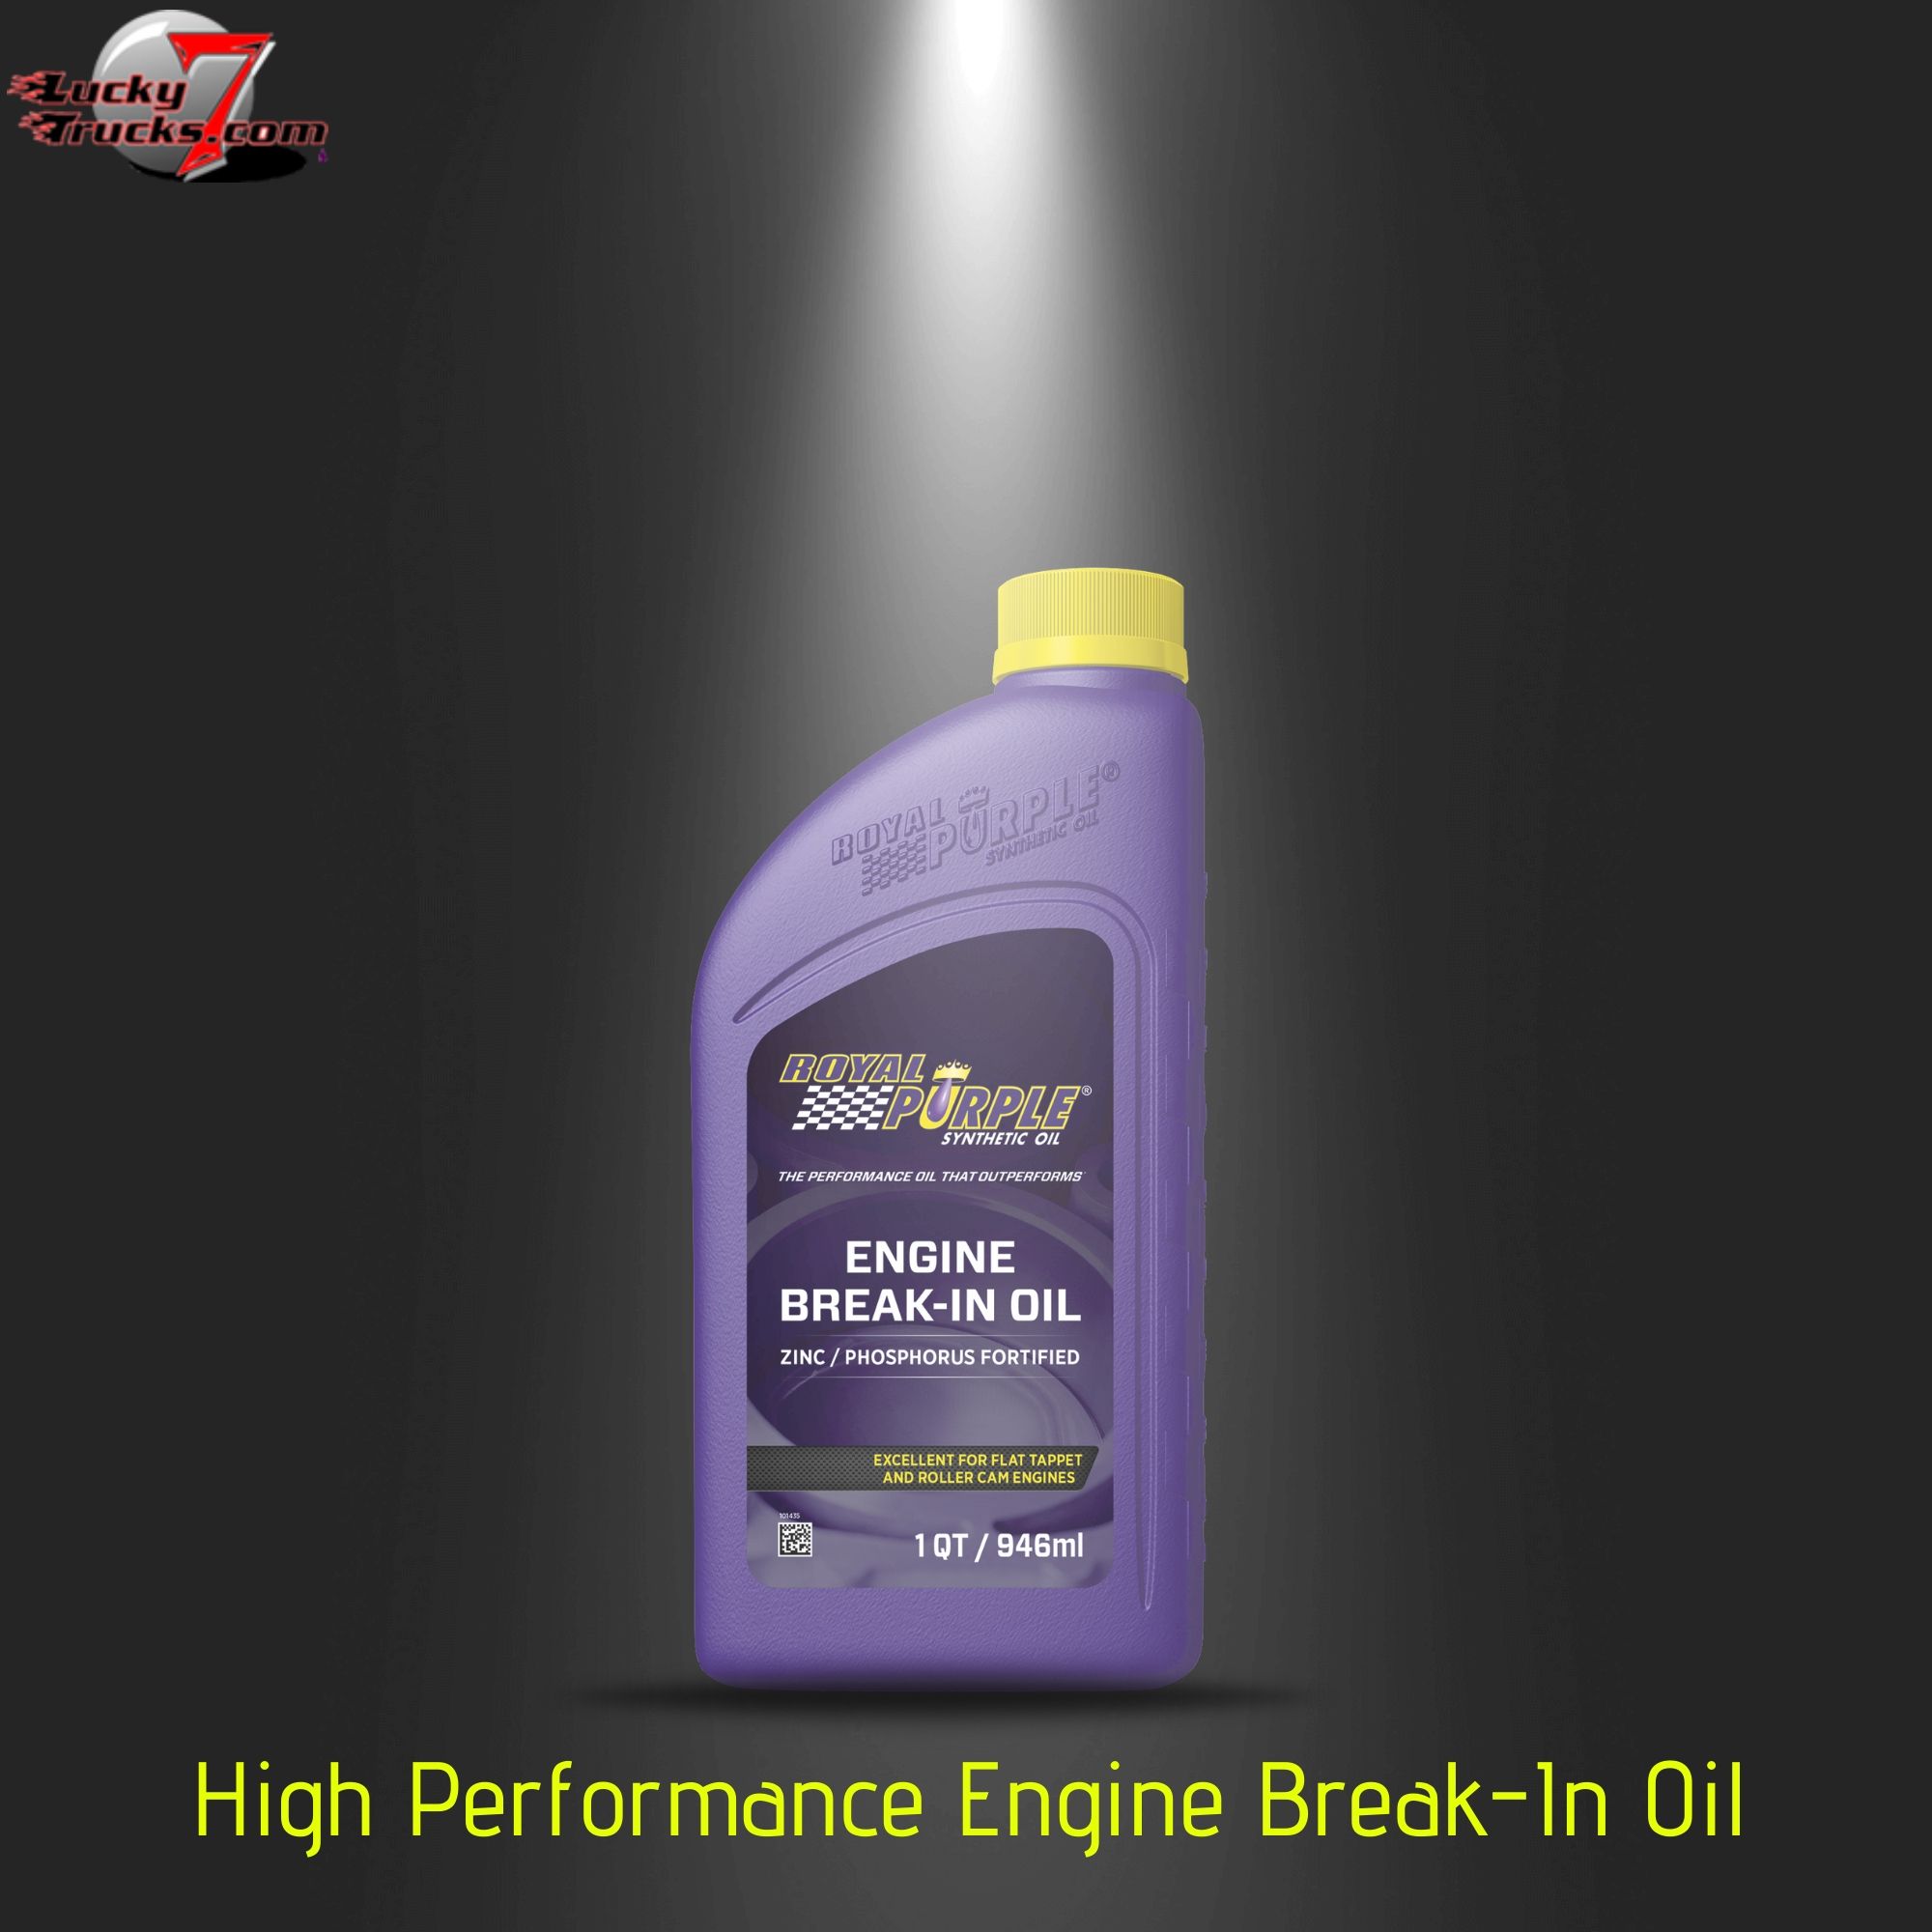 High Performance Engine Break-In Oil